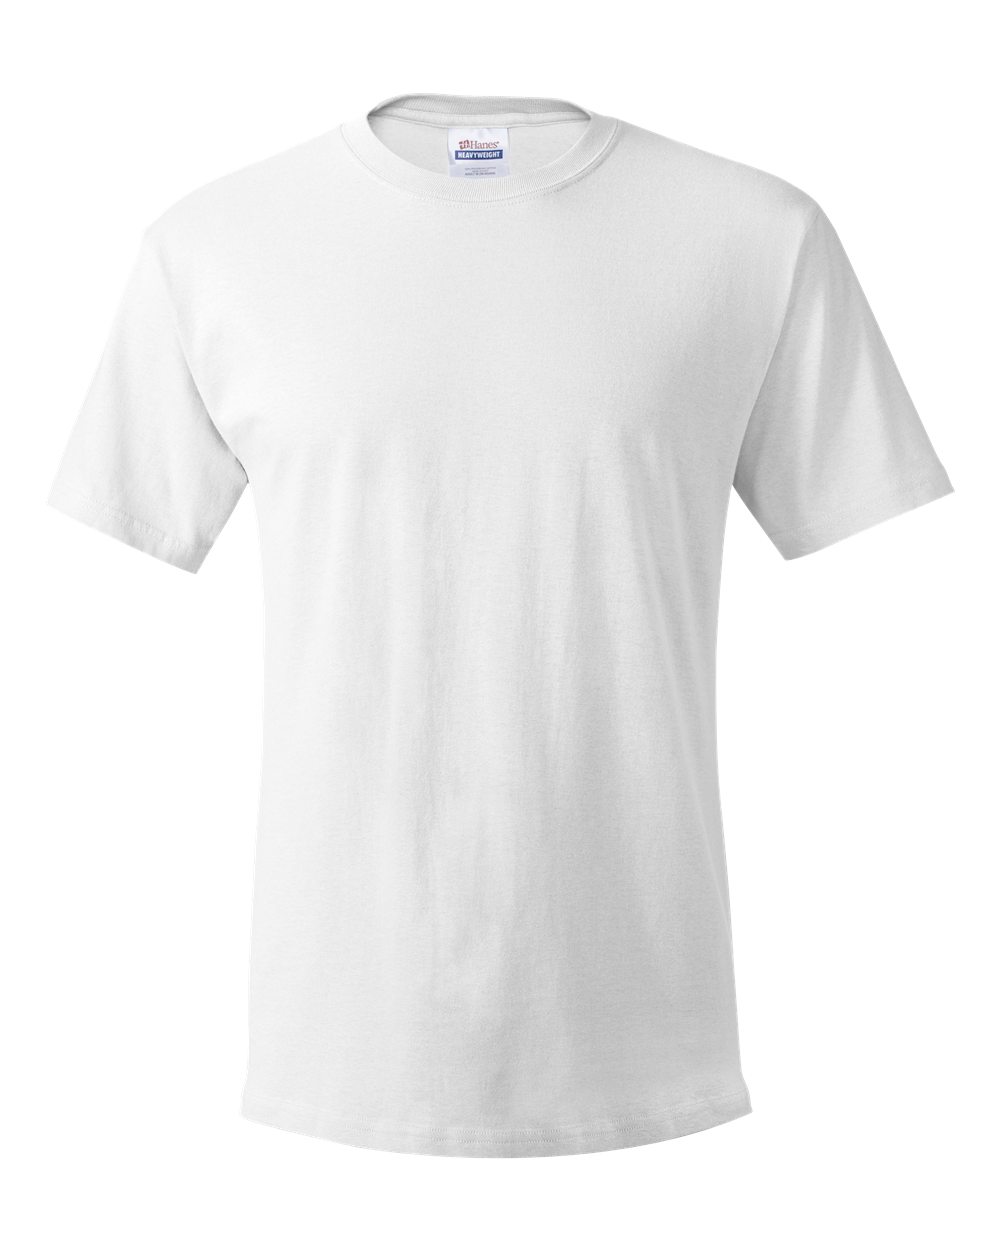 Hanes Unisex Shirt Size Chart